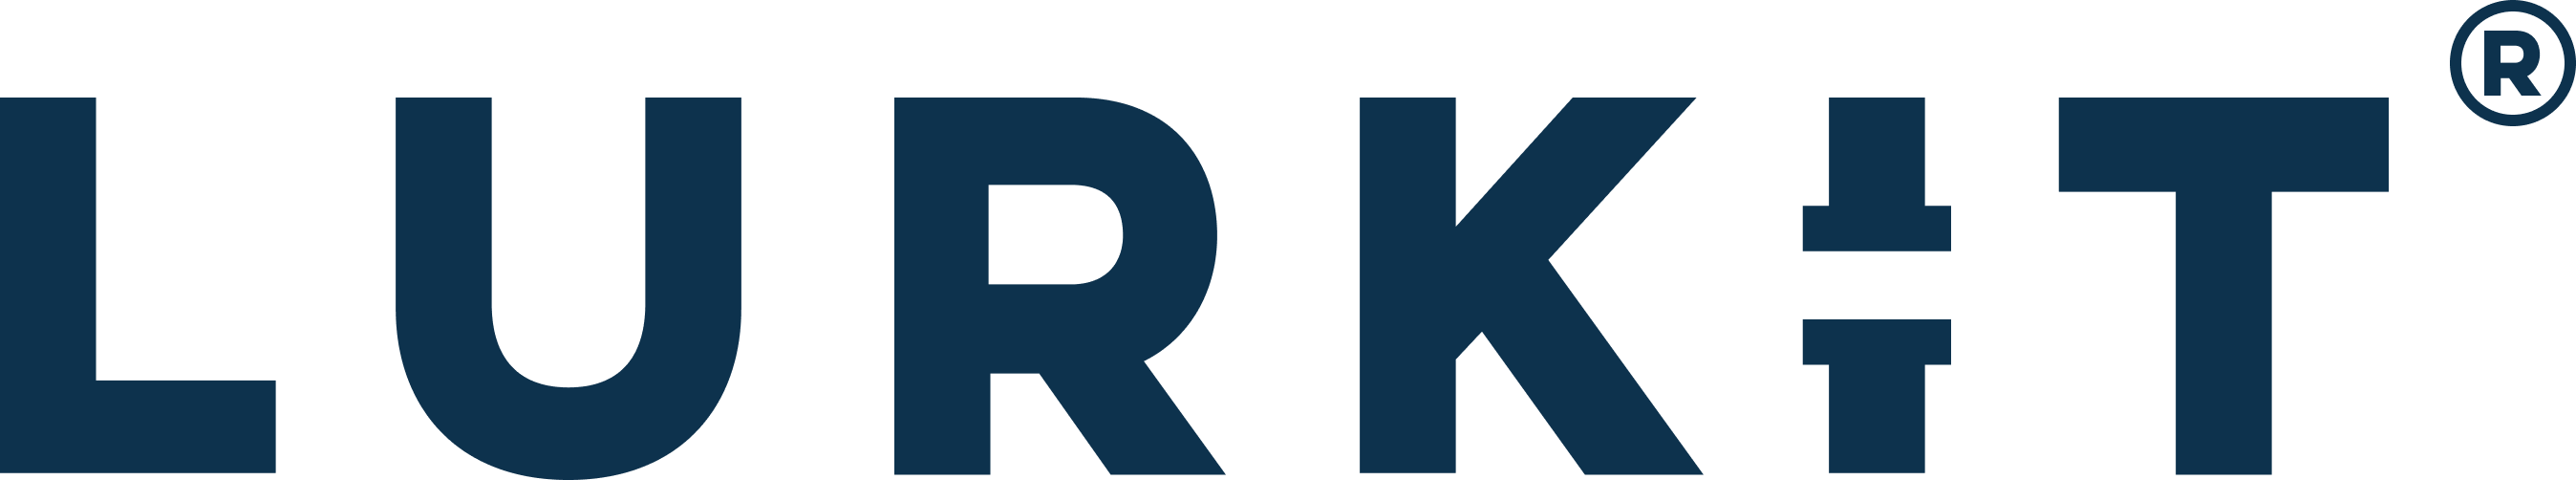 Lurkit-logo-default-navy-w_r (1)-1